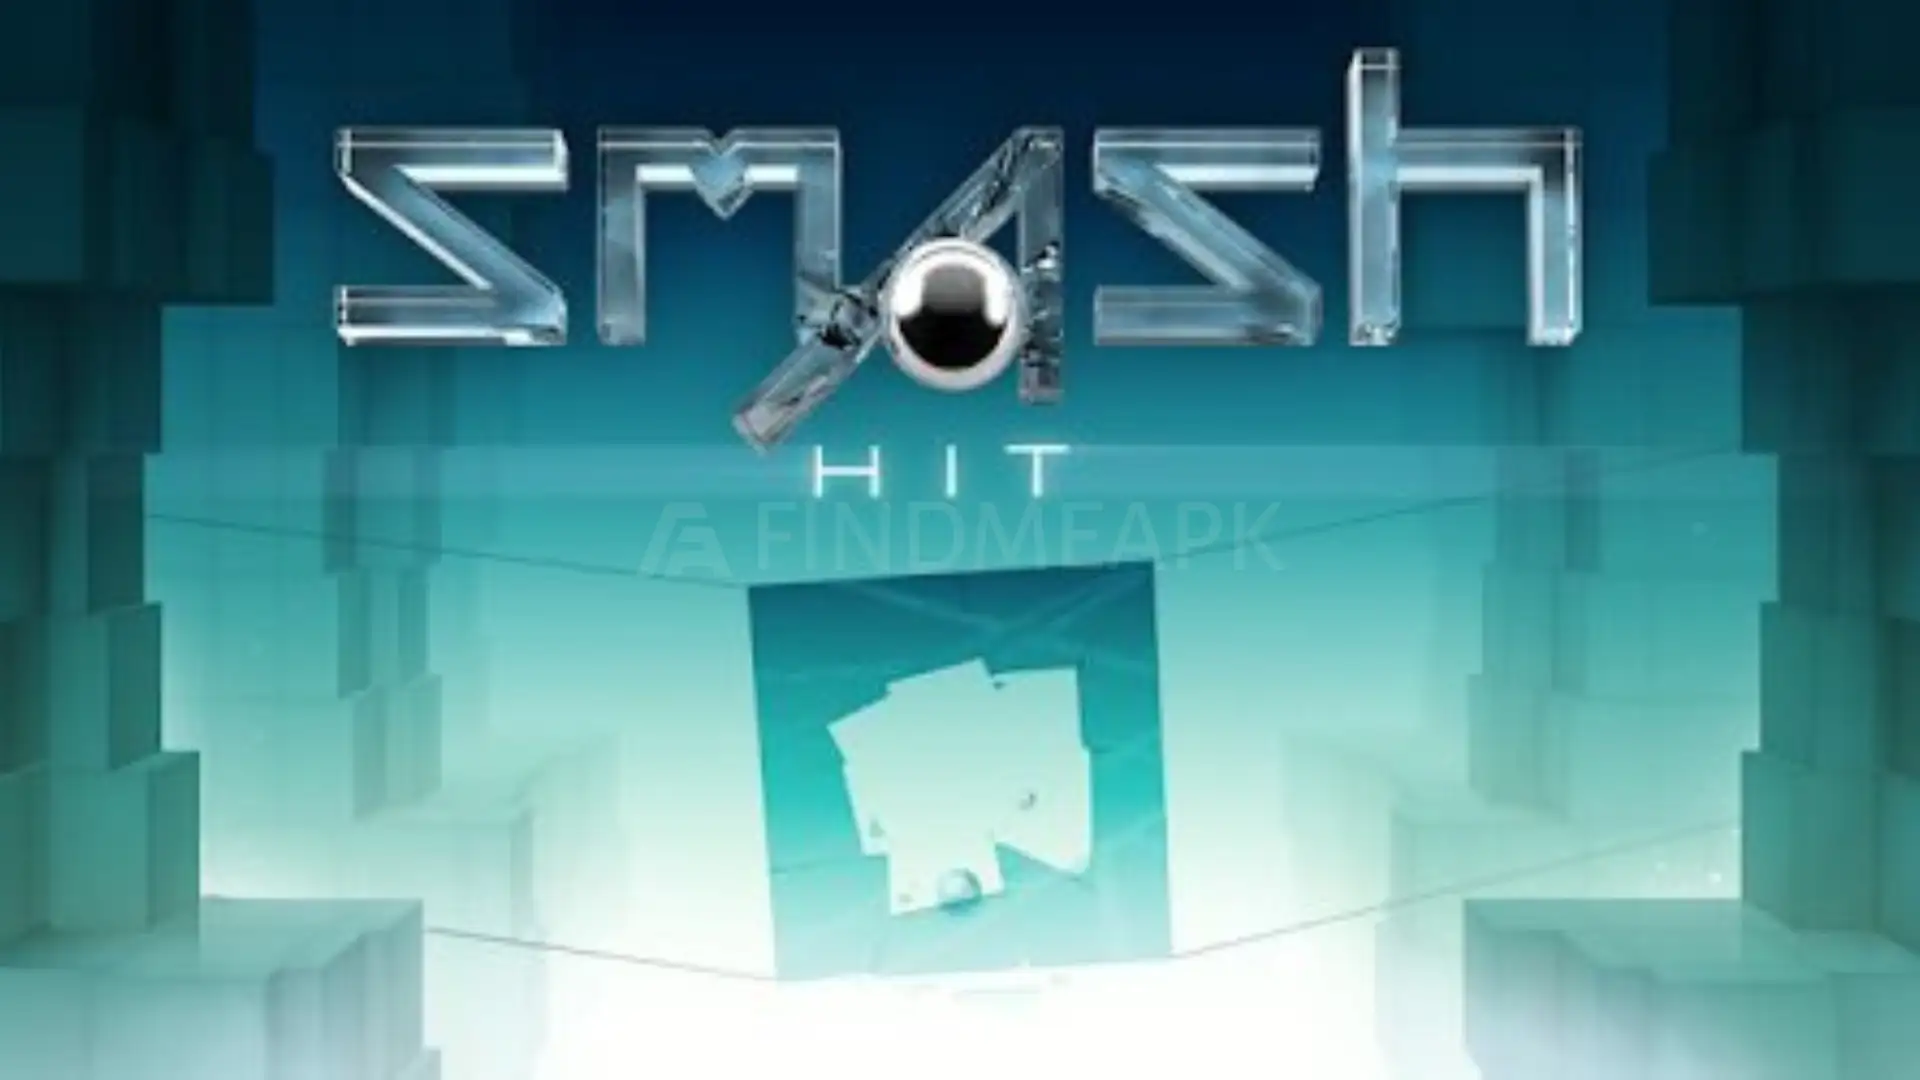 Smash hit feature image